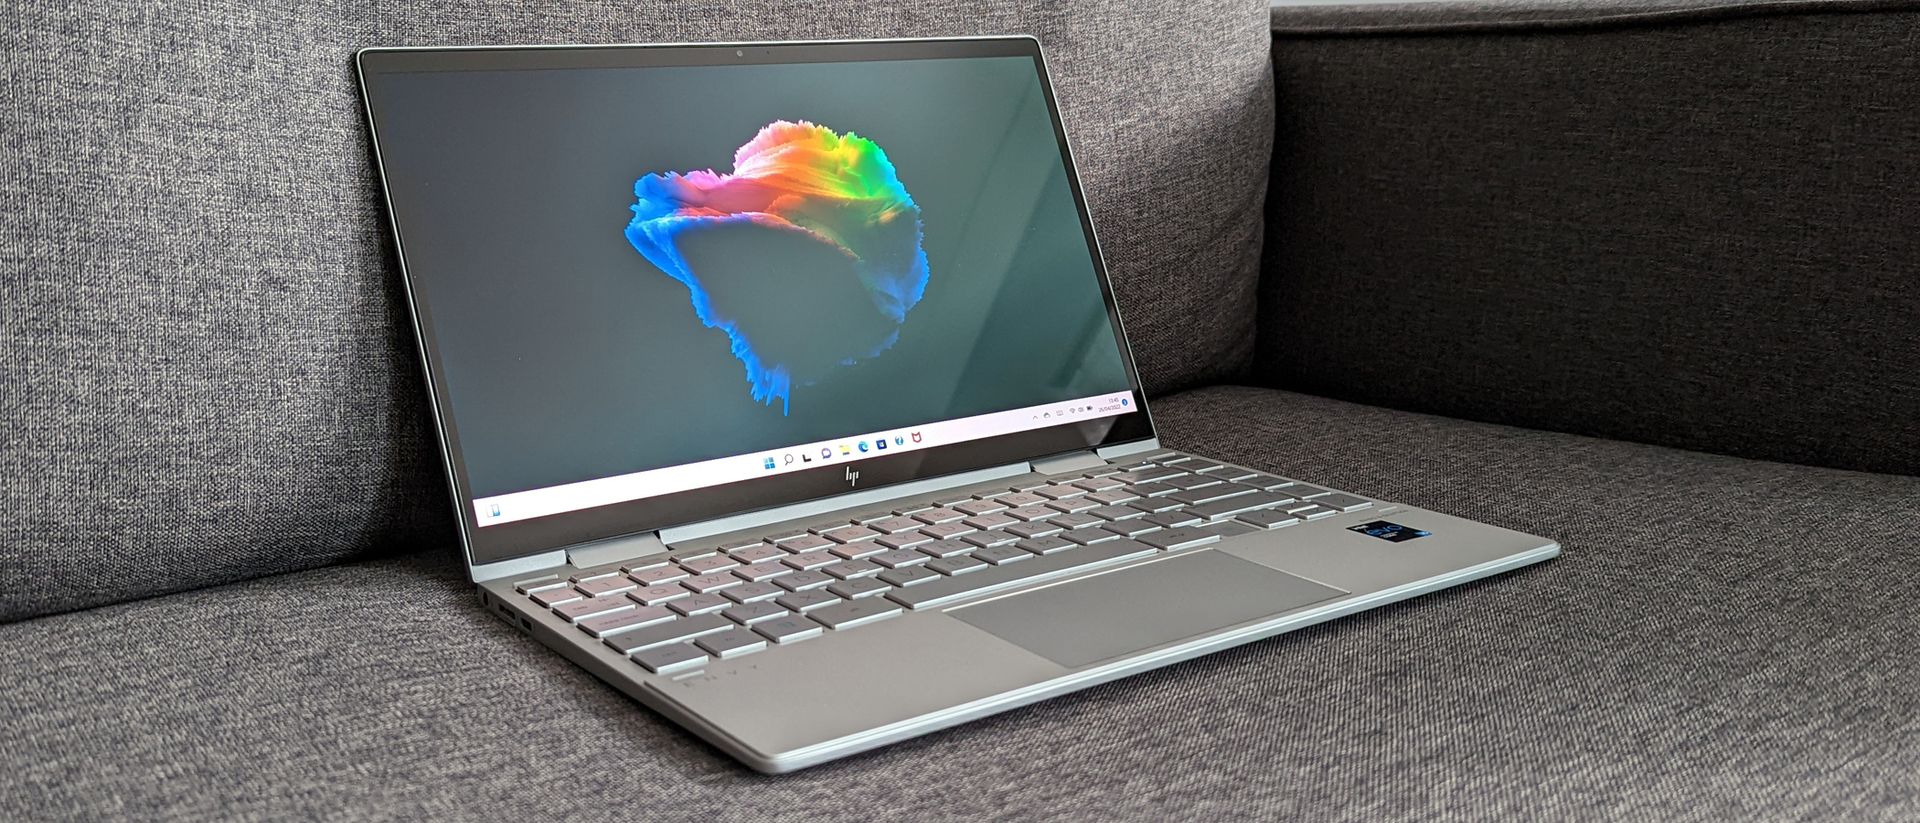 HP Envy x360 13 review: a stylish convertible laptop | T3